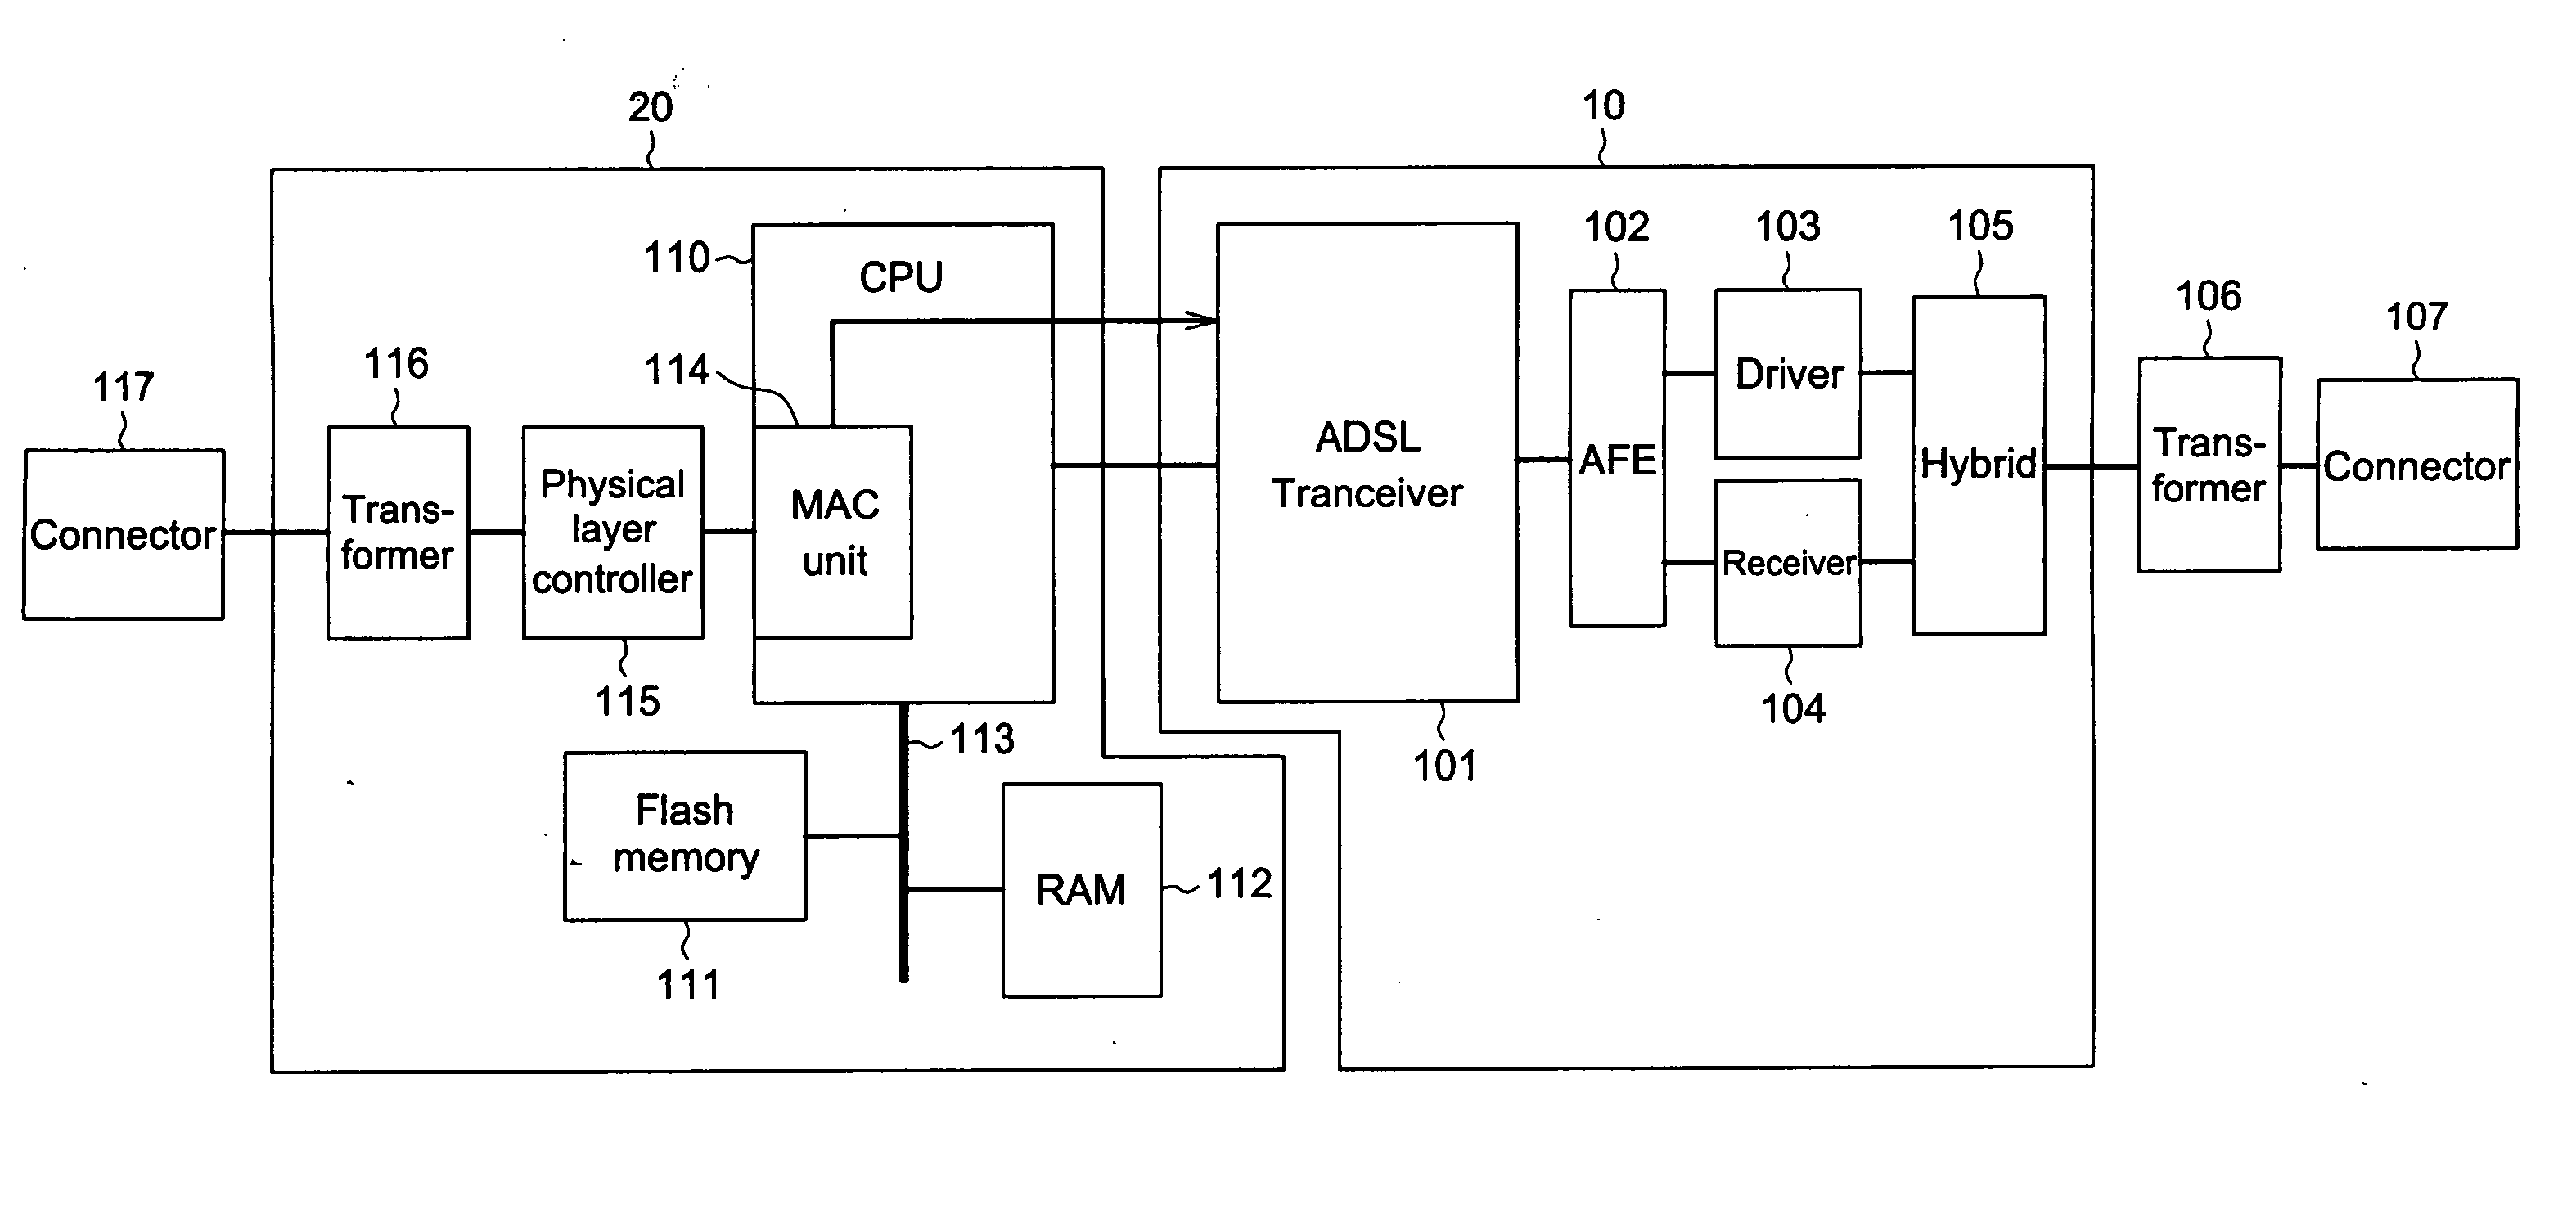 DSL modem apparatus and control method for DSL modem apparatus